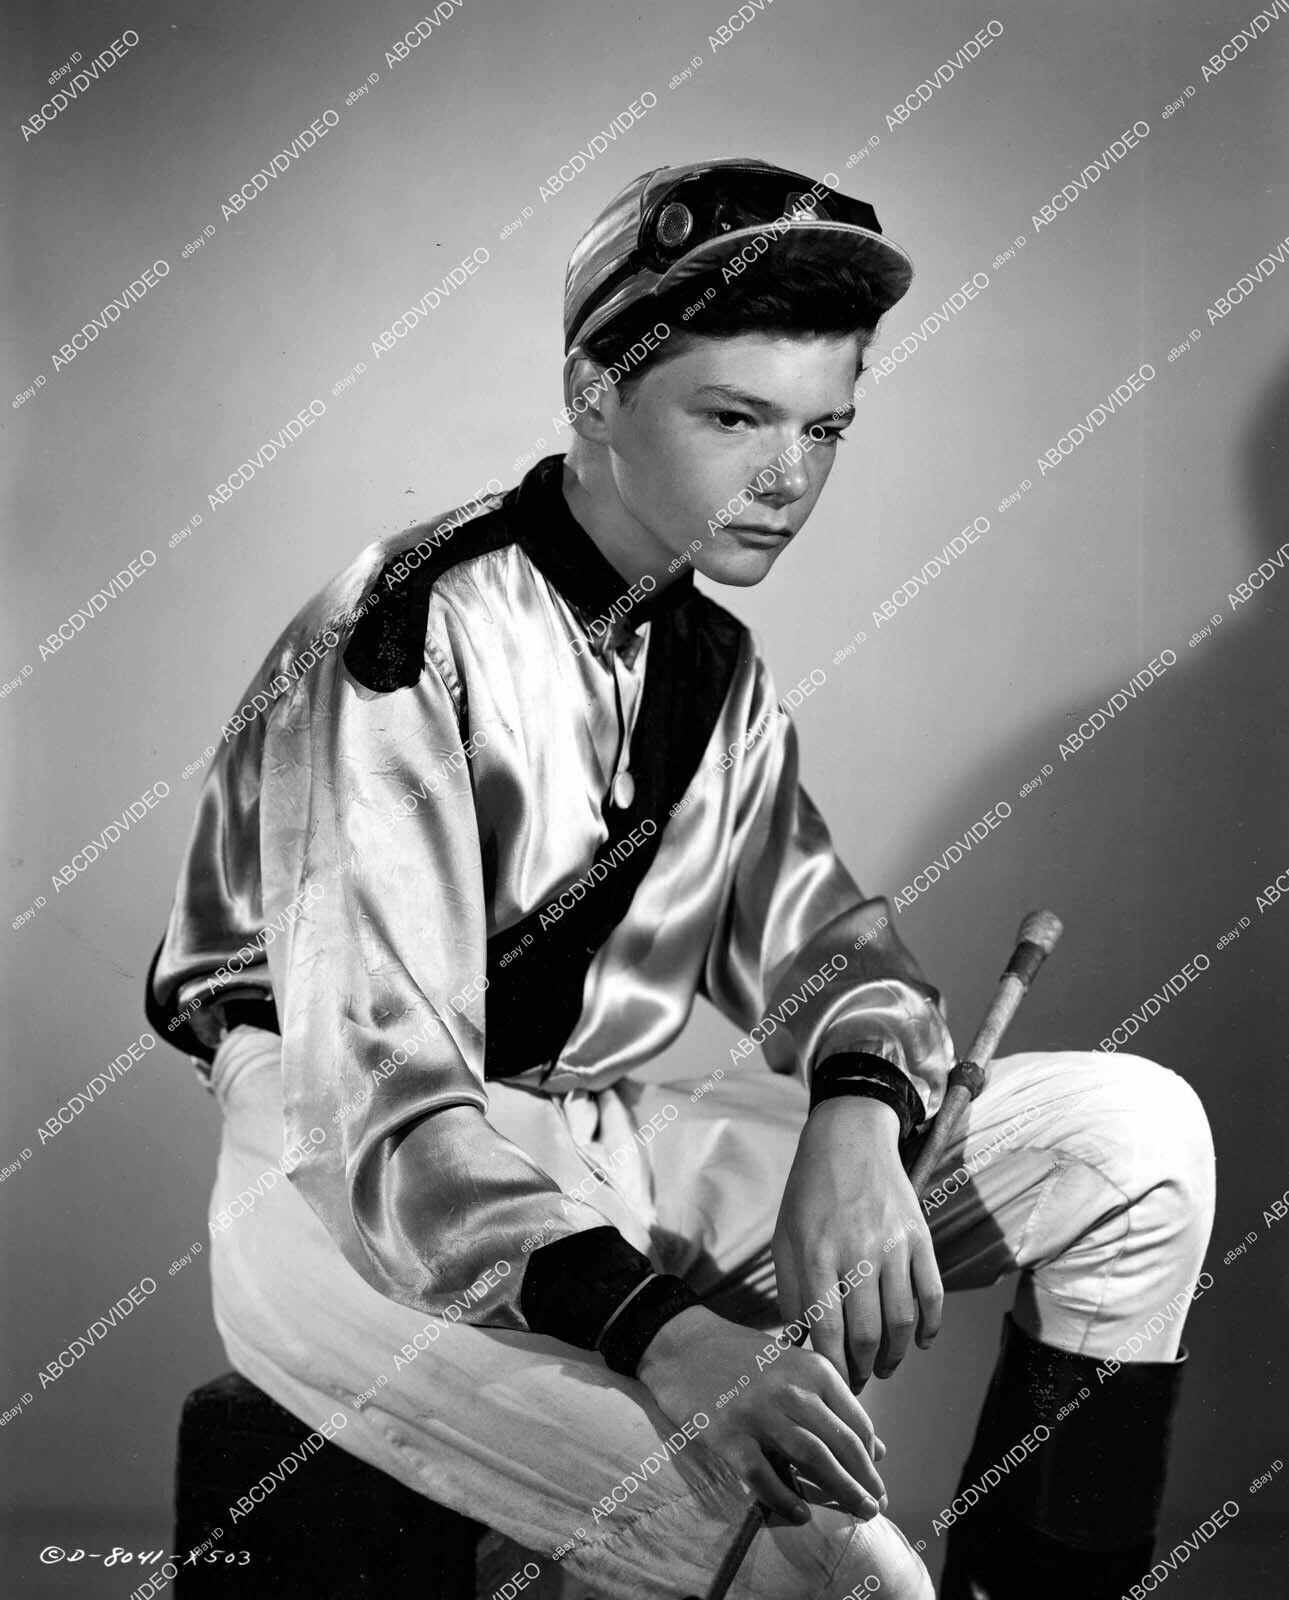 crp-41721 1952 child star Johnny Stewart as a jockey film Boots Malone crp-41721